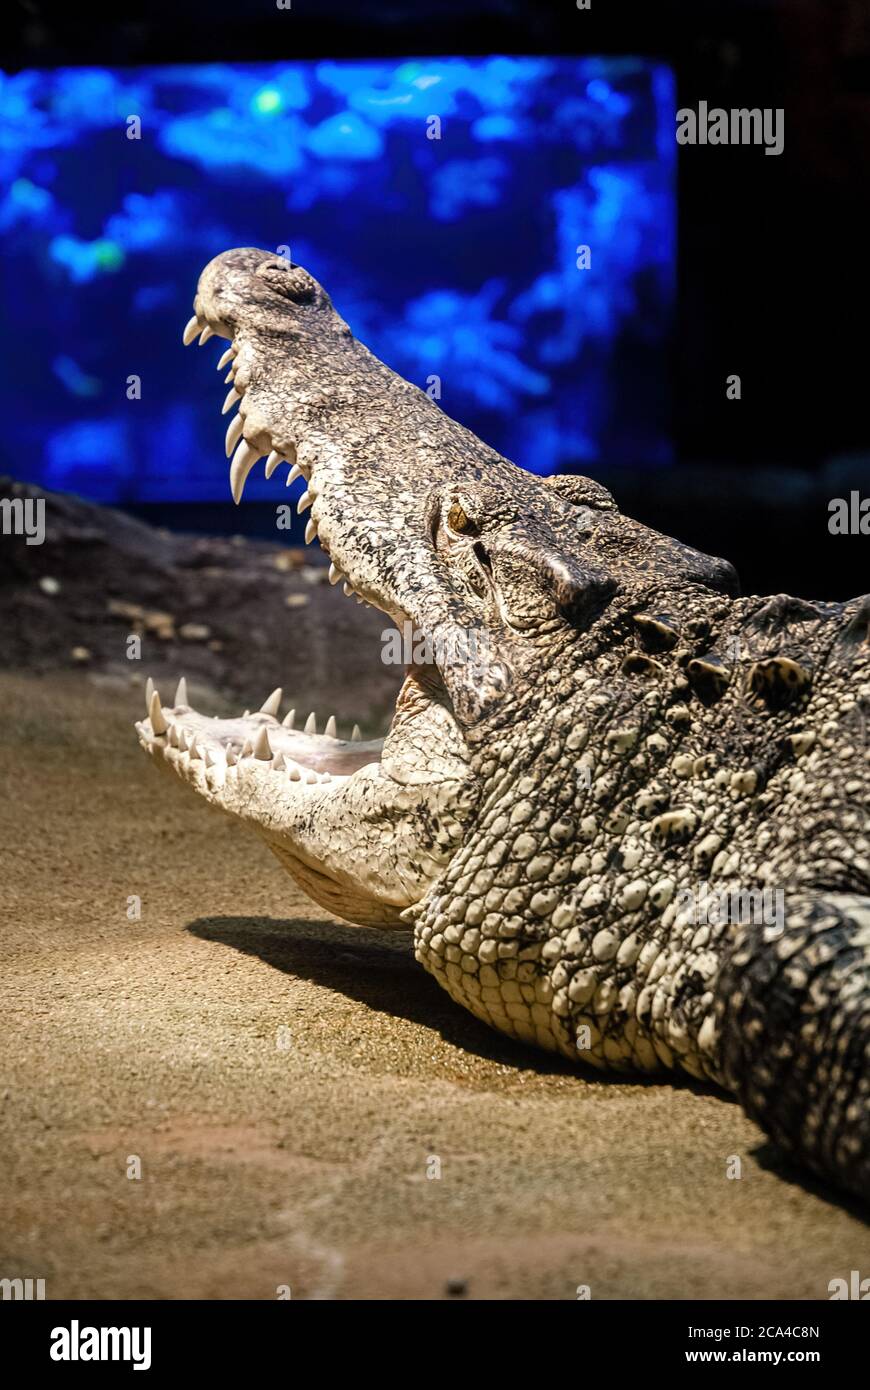 The Cuban crocodile (Crocodylus rhombifer) is a small species of crocodile found only in Cuba. Stock Photo